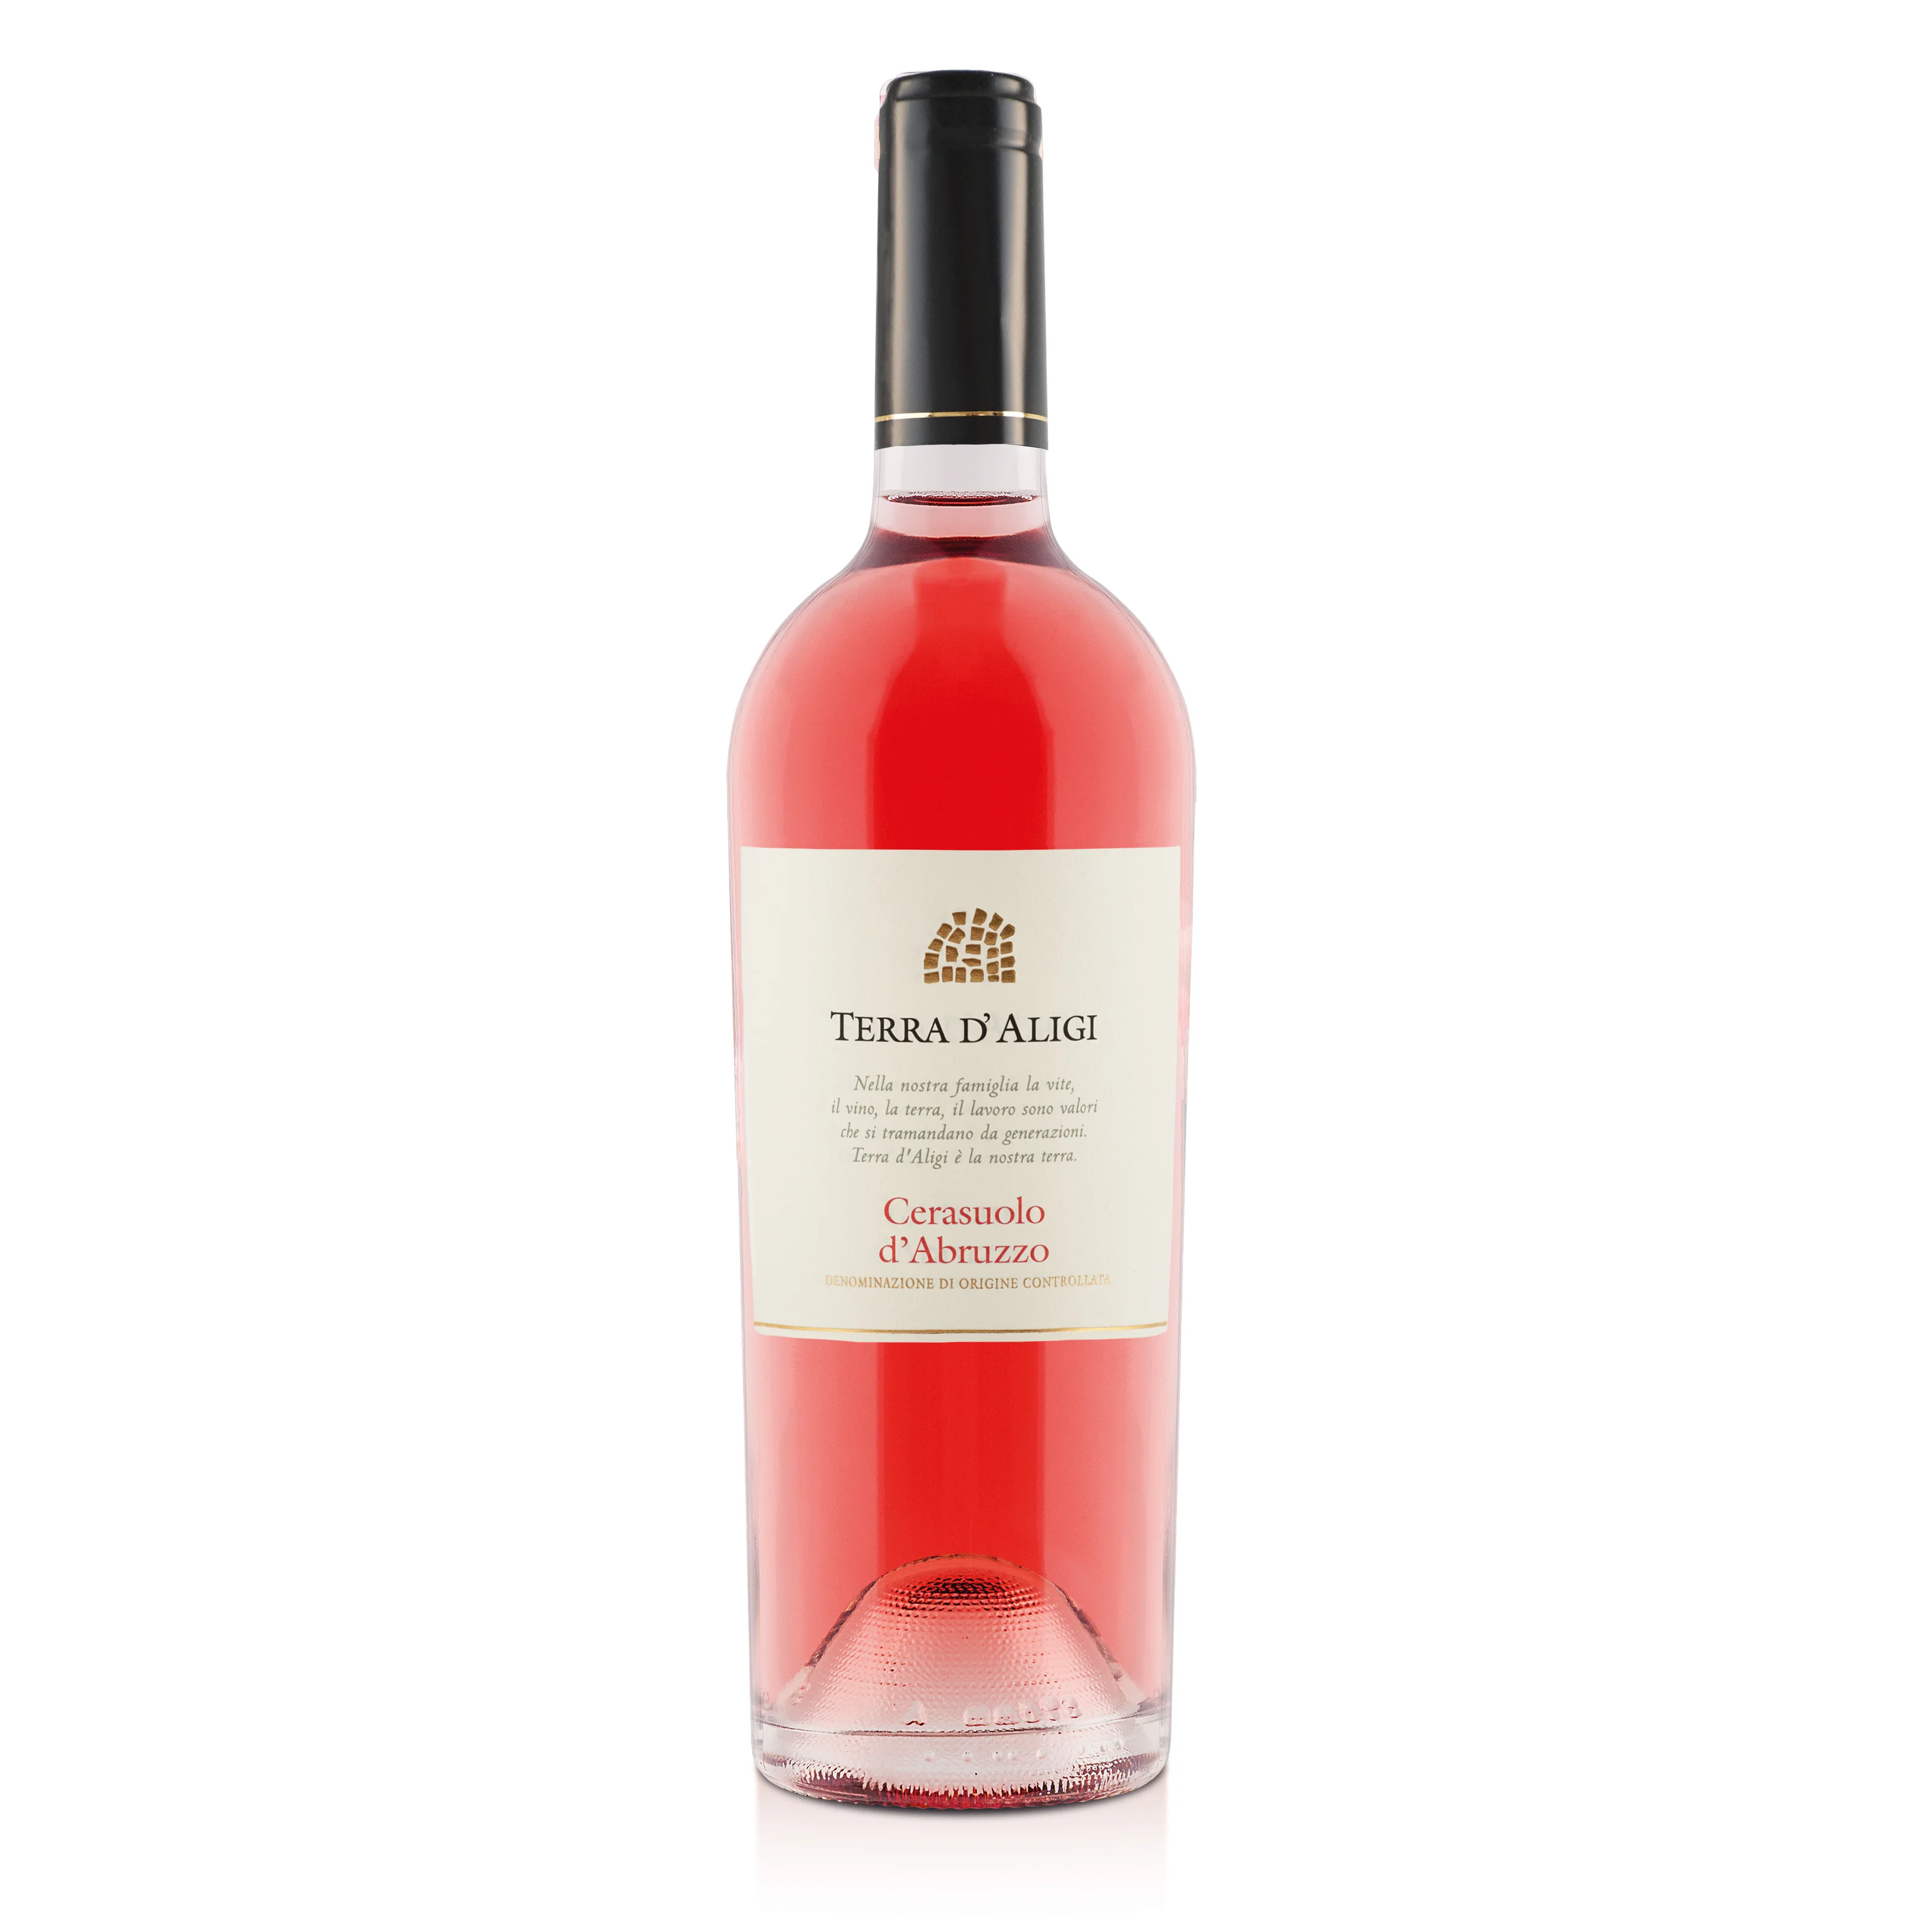 Розовые вина испании. Cerasuolo d'Abruzzo. Вино Cerasuolo. Montecarlo Rose вино Италия. Розовое вино Италия.